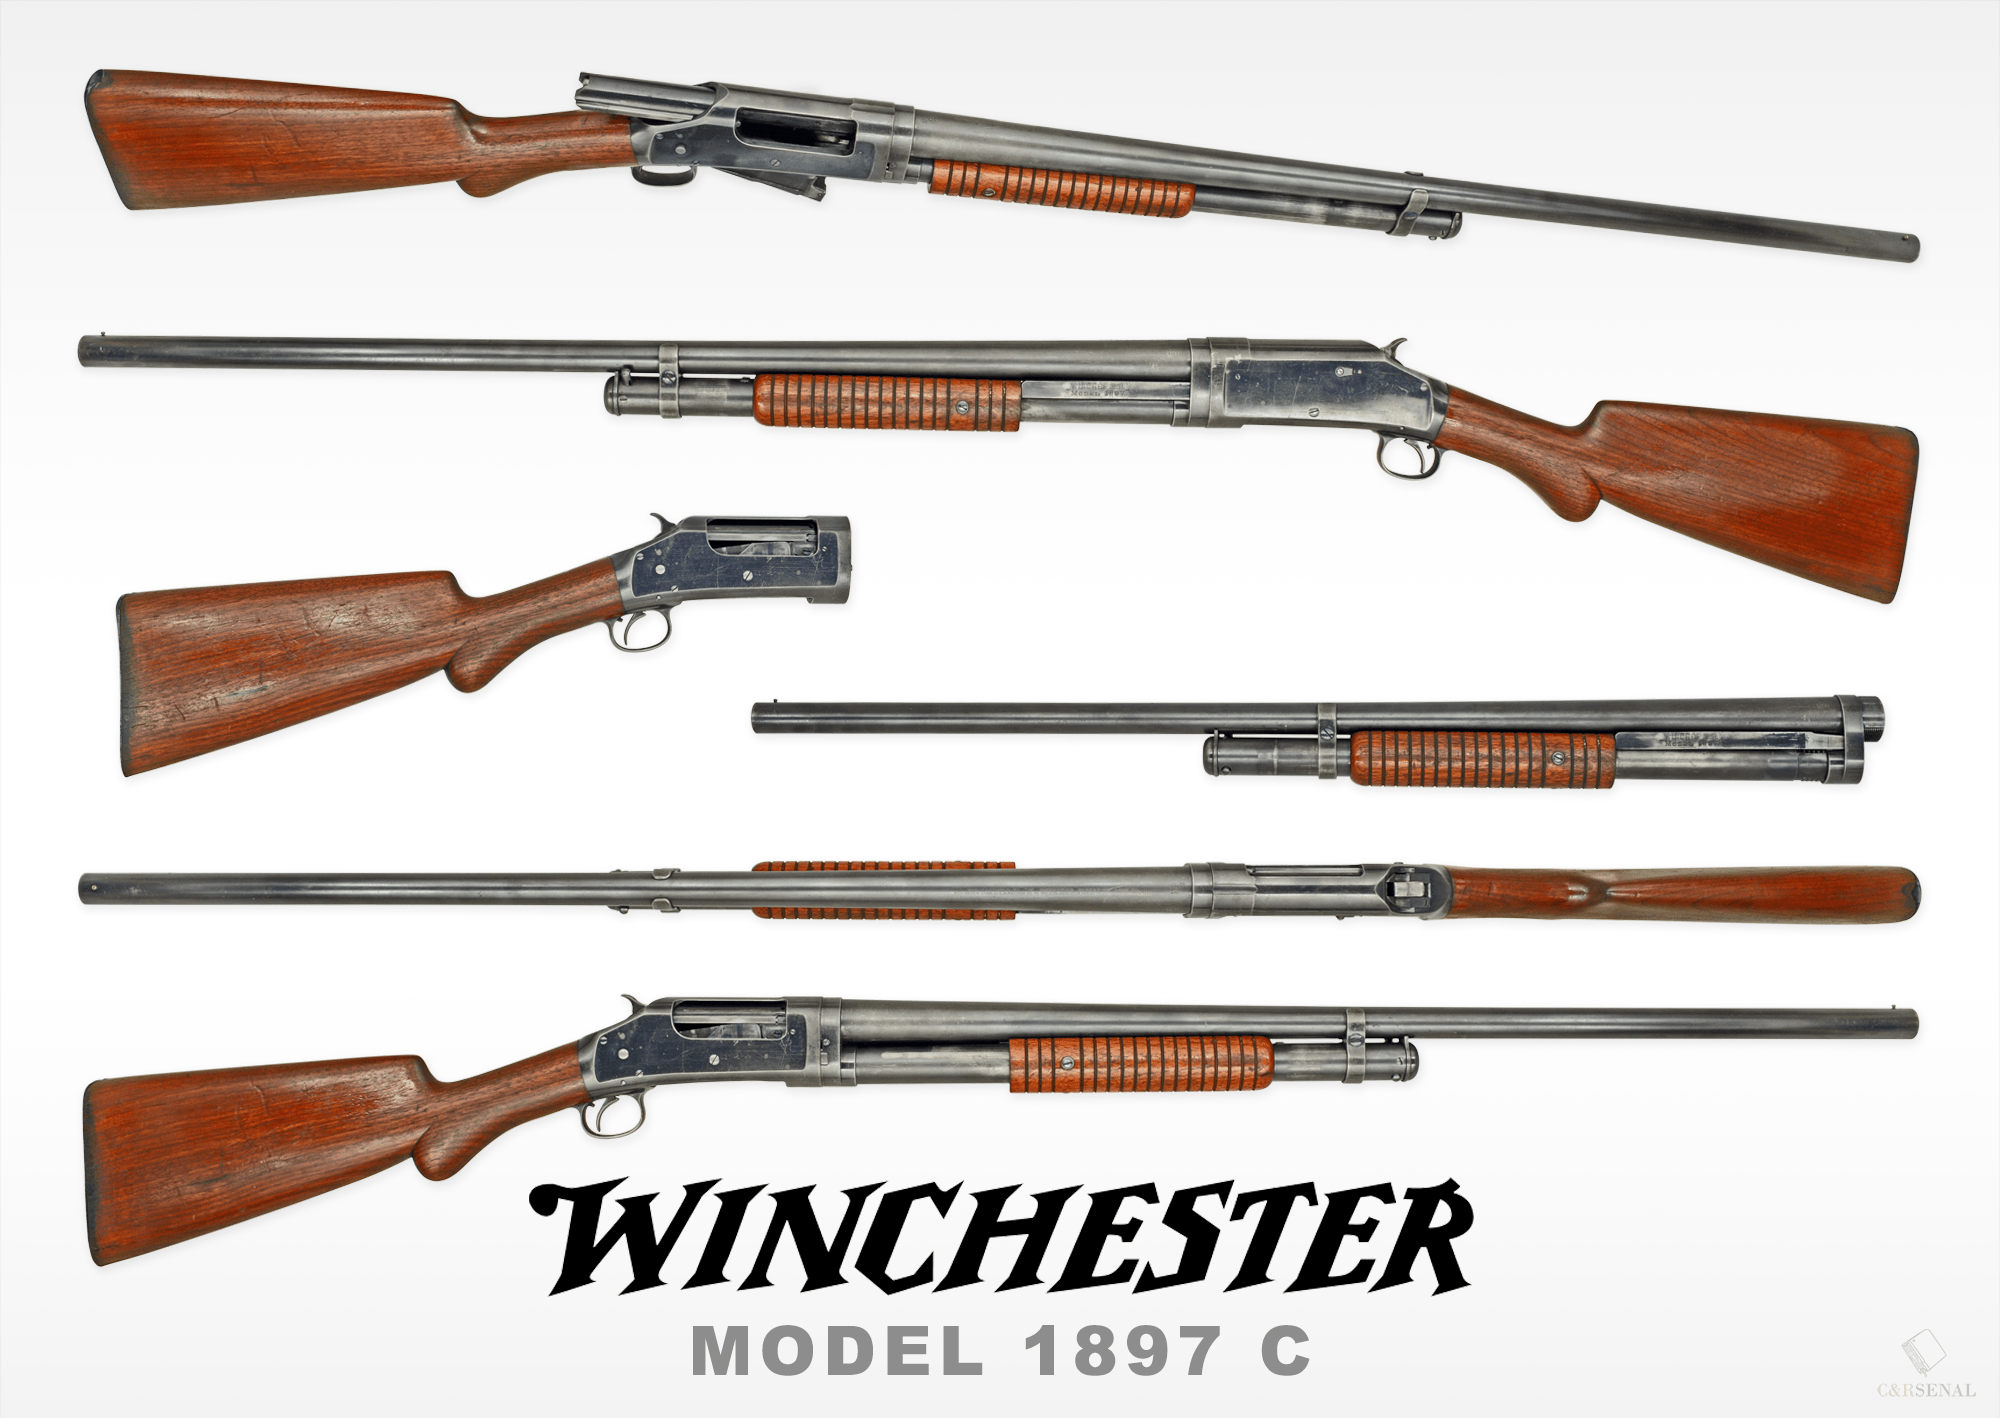 https://www.candrsenal.com/wp-content/uploads/2020/08/1898-Winchester-Model-1897-C.png